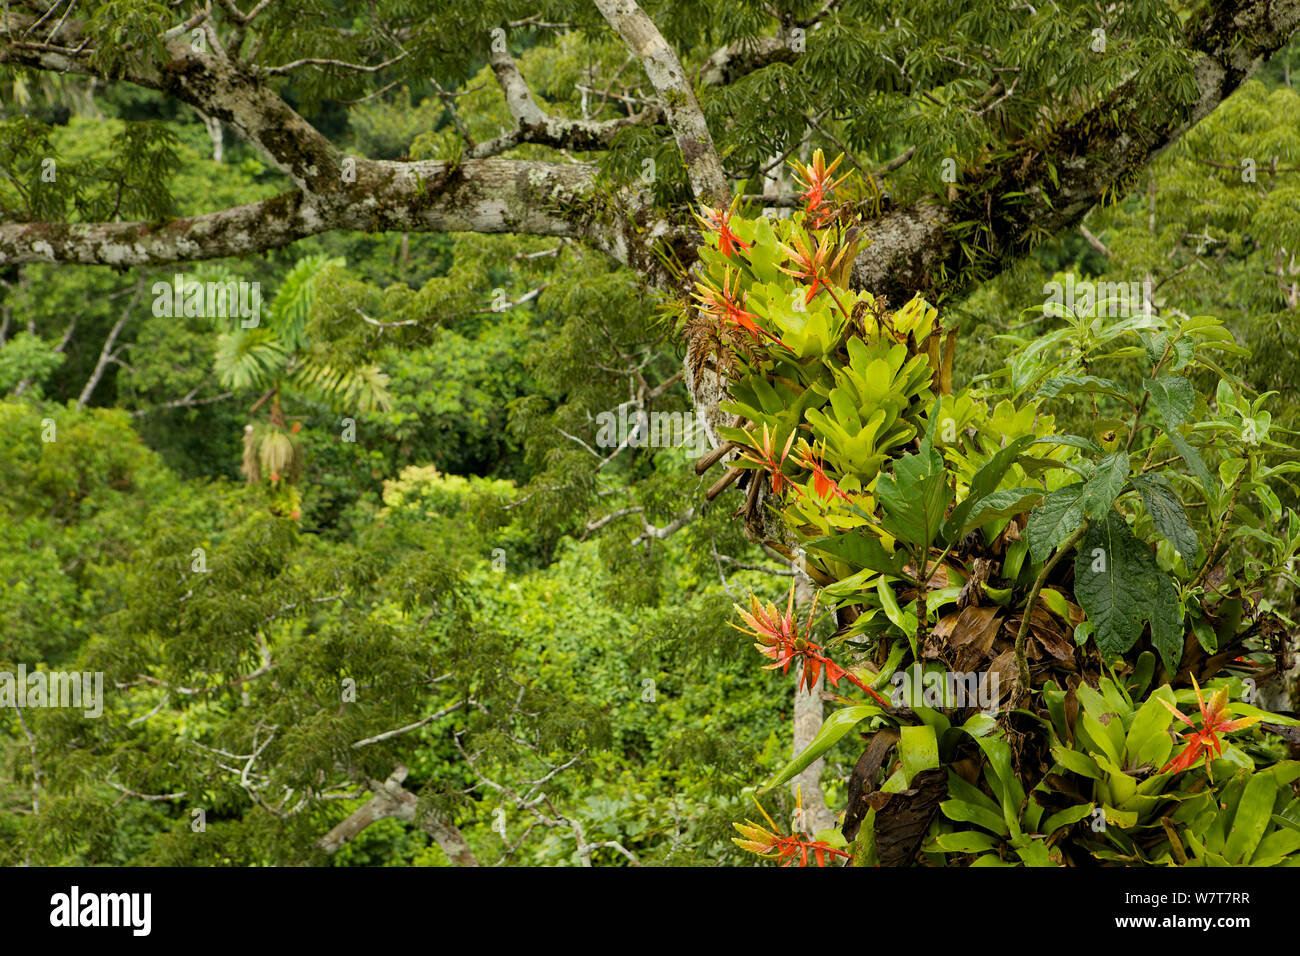 Amazon rainforest canopy view with flowering Bromeliad epiphytes growing on a branch of a giant Ceiba tree. Tiputini Biodiversity Station, Amazon Rainforest, Ecuador, January. Stock Photo